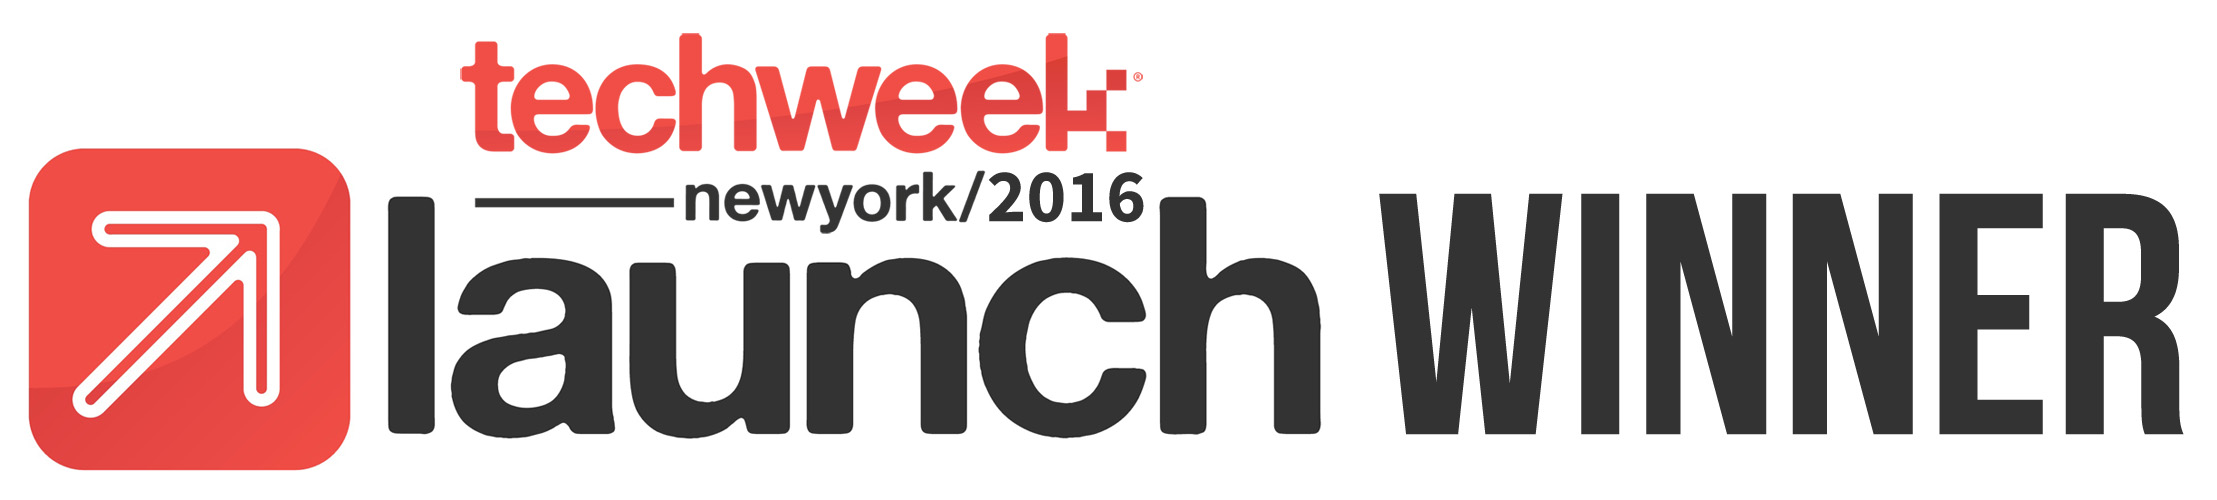 ct networks techweek winner